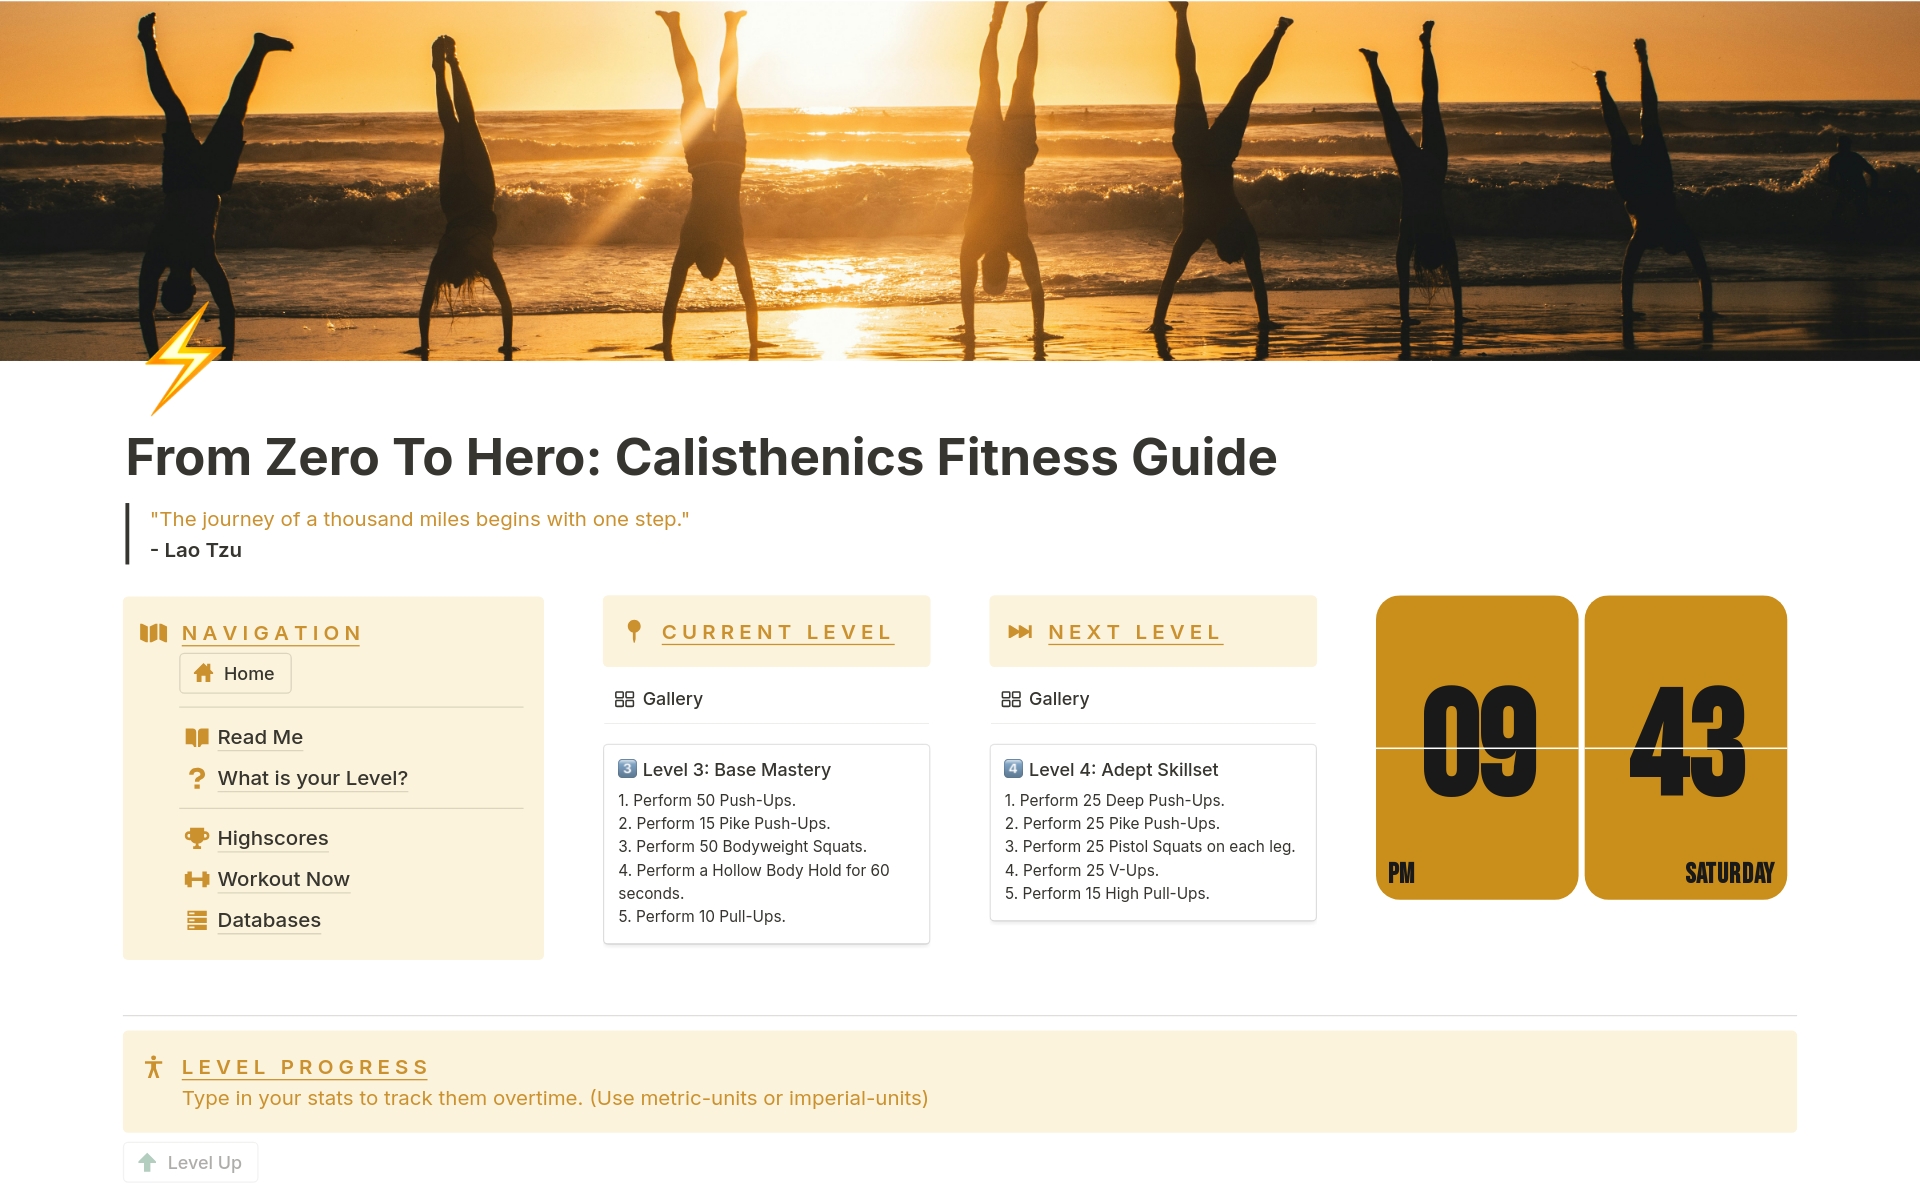 Aperçu du modèle de From Zero To Hero: Calisthenics Fitness Guide